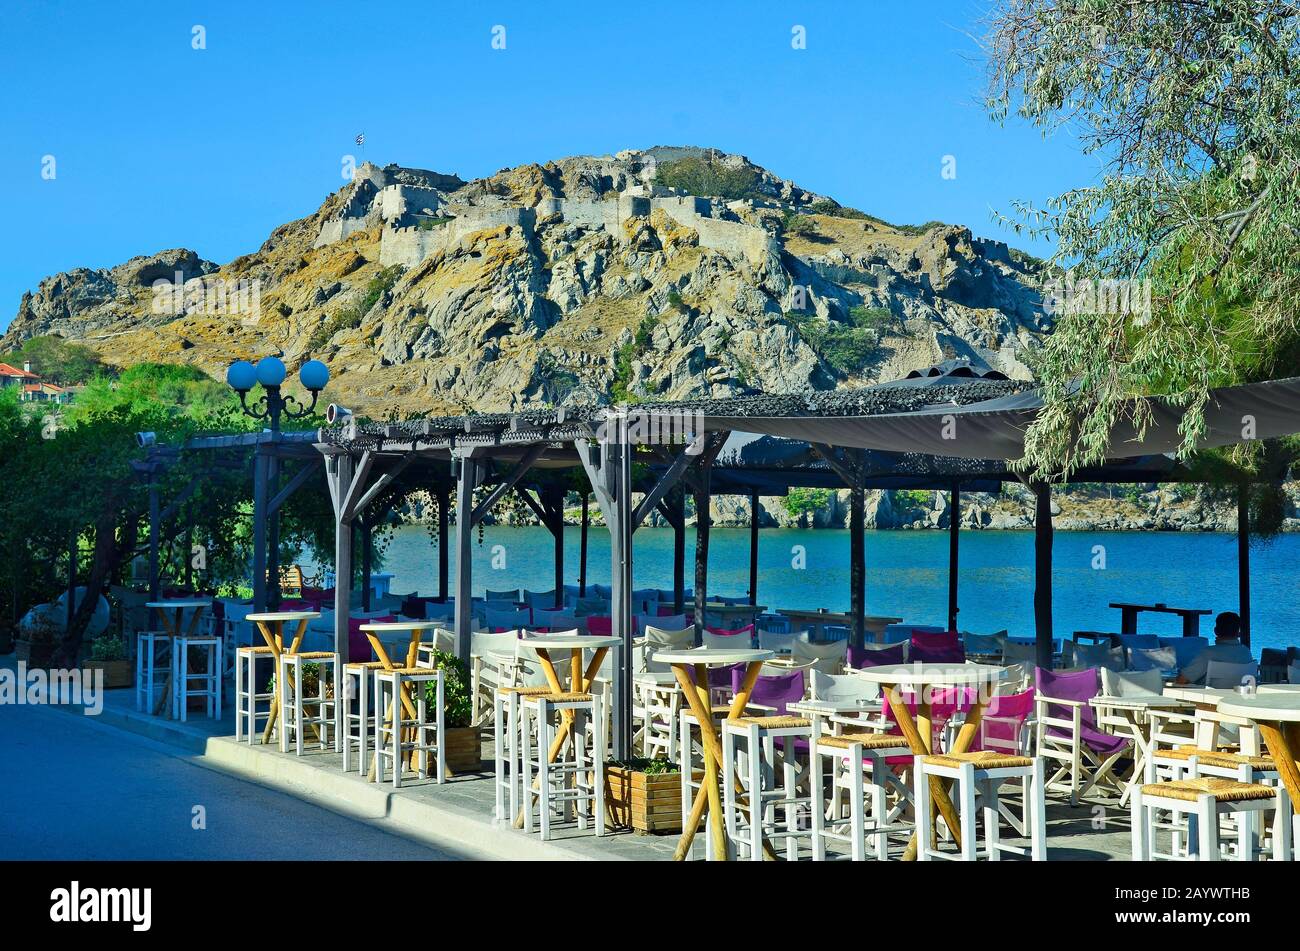 Greece, fortress of Myrina on Lemnos Island with restaurants on promenade Stock Photo